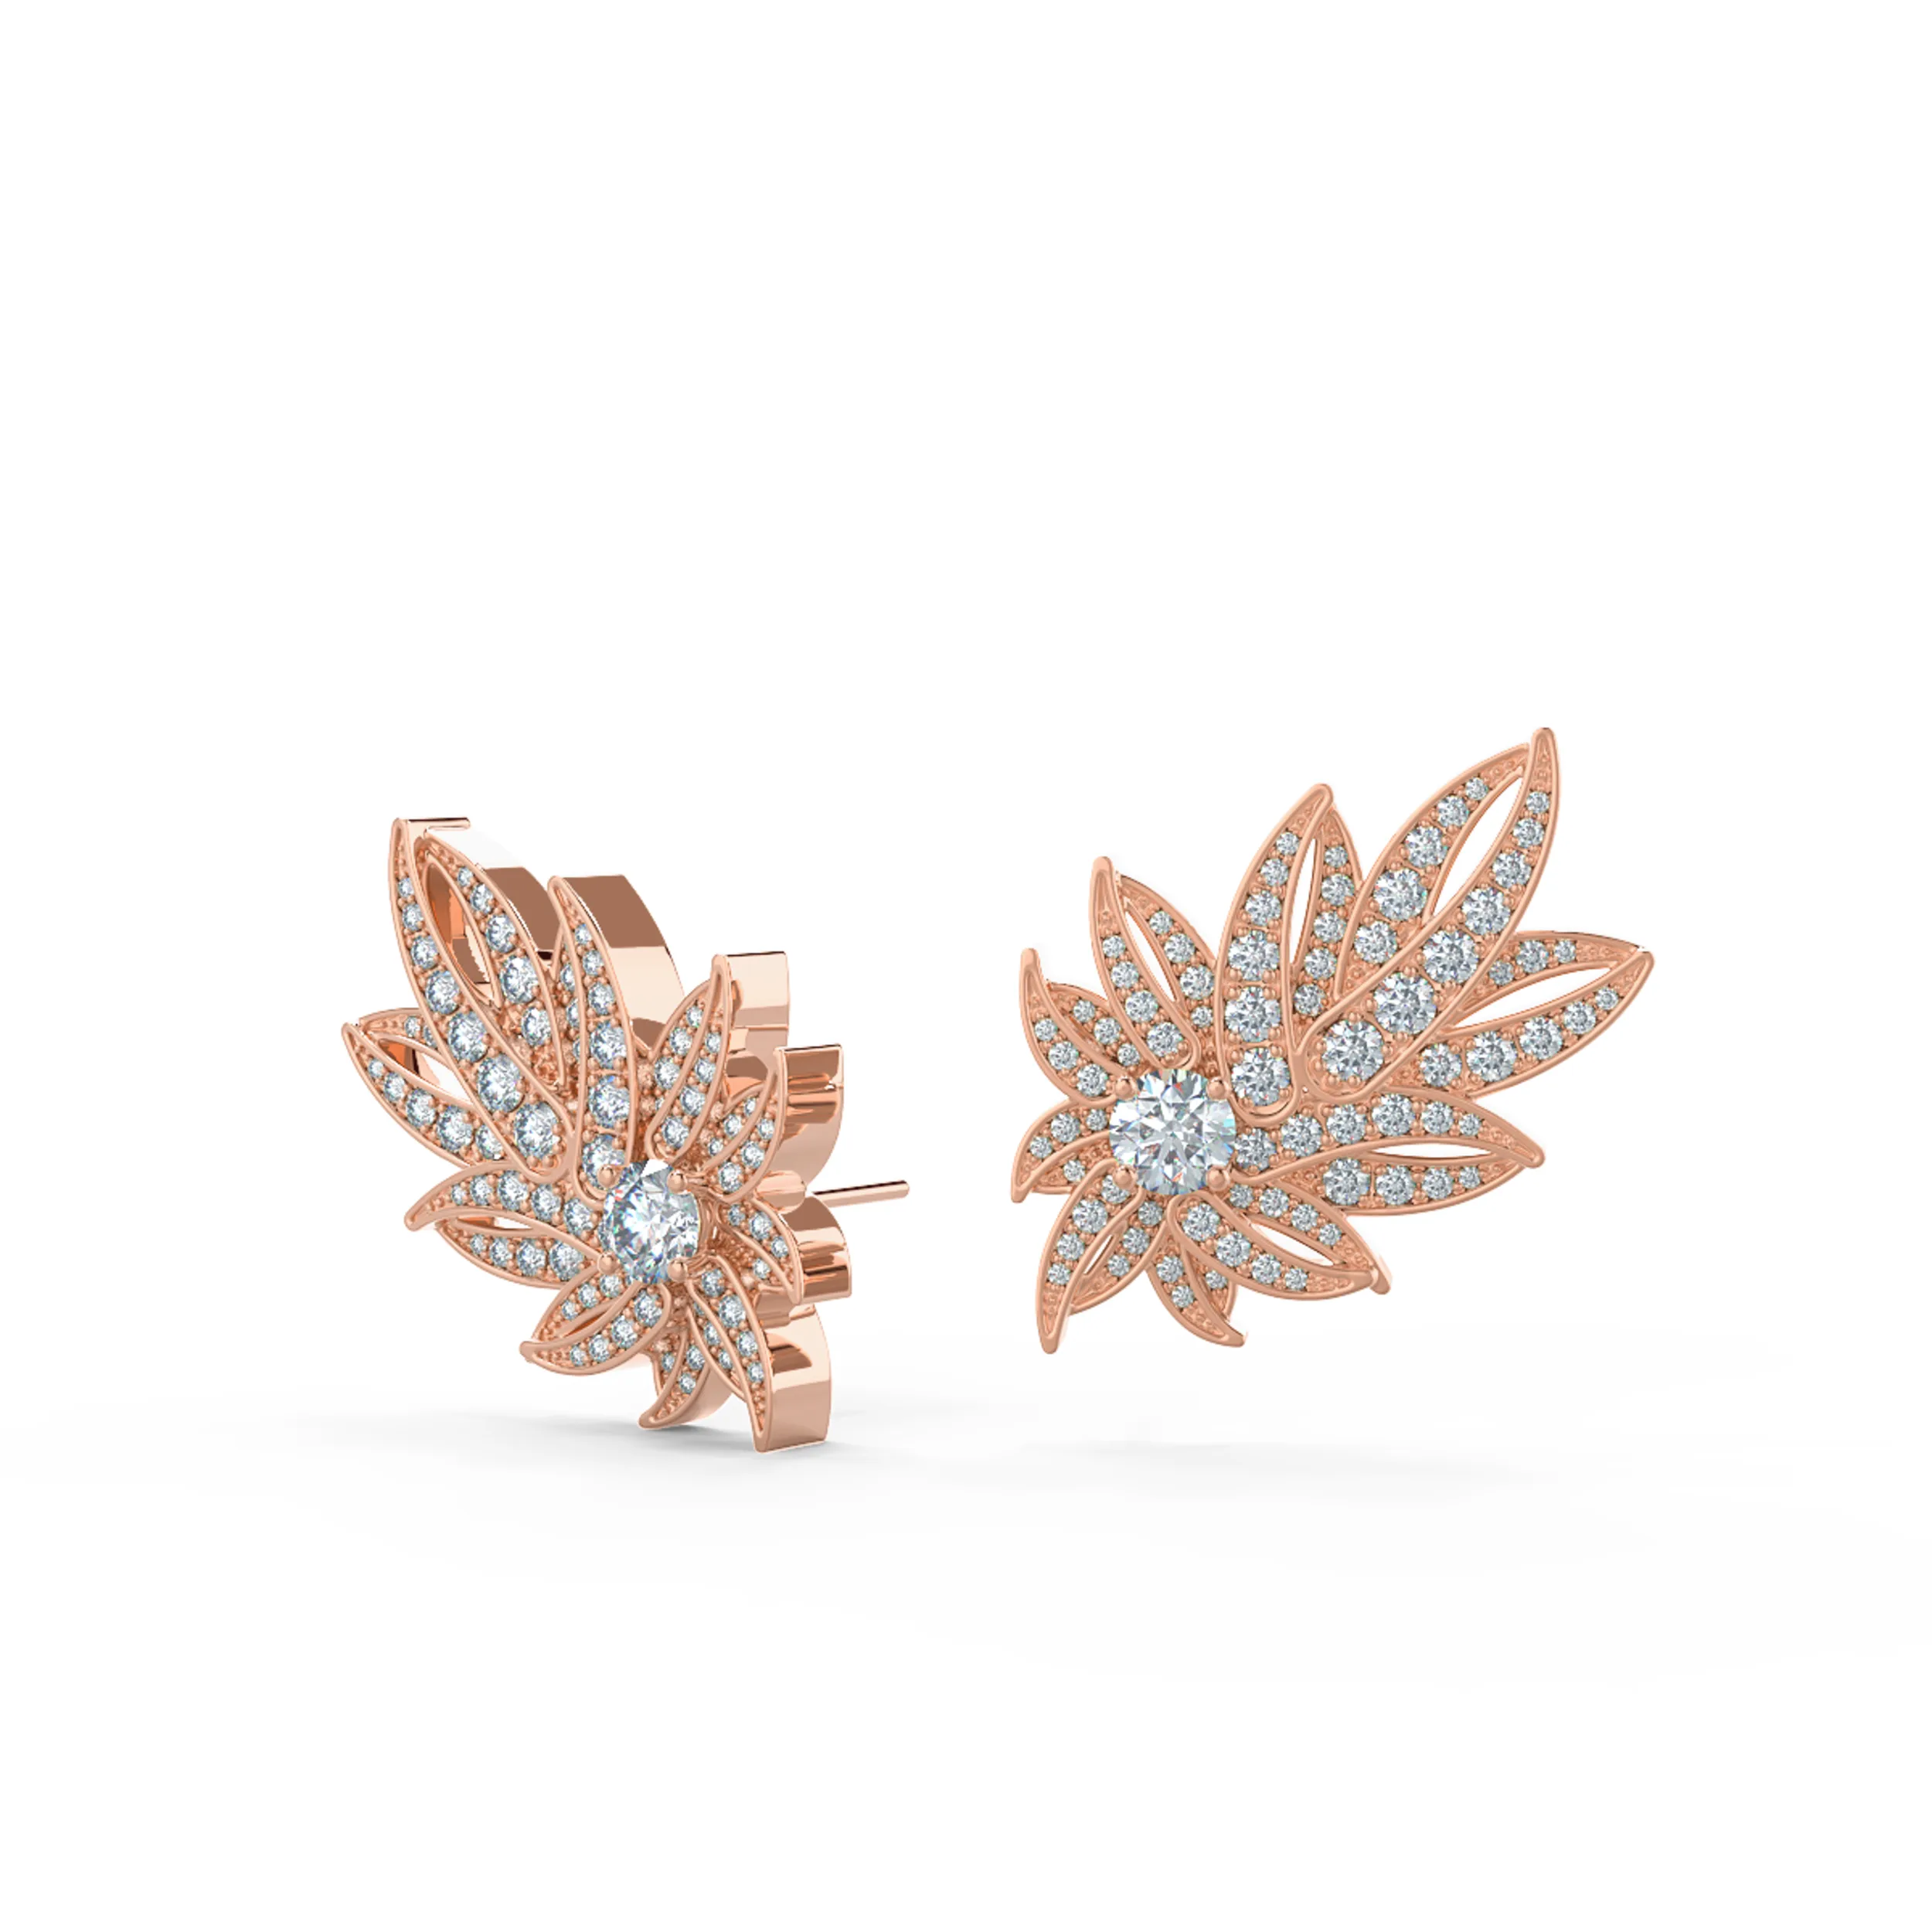 formal-diamond-earrings-rose-gold_1574715681246-83TO2TXL02C6KQMXWYDL